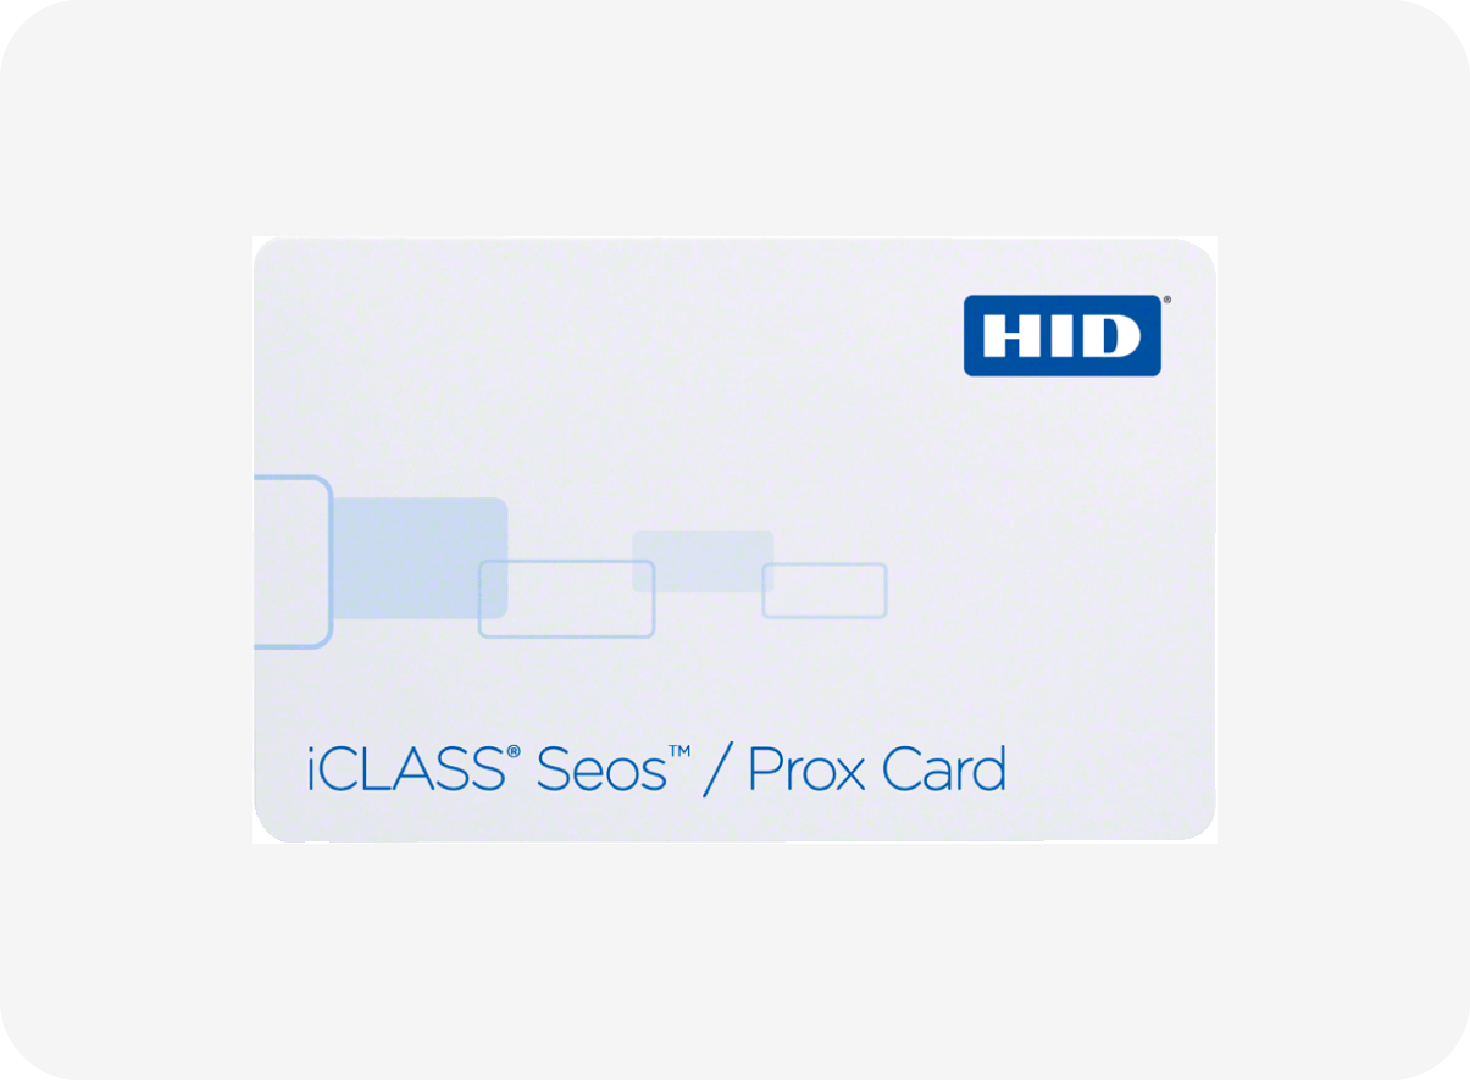 Buy HID Seos iCLASS 522X Card at Best Price in Dubai, Abu Dhabi, UAE